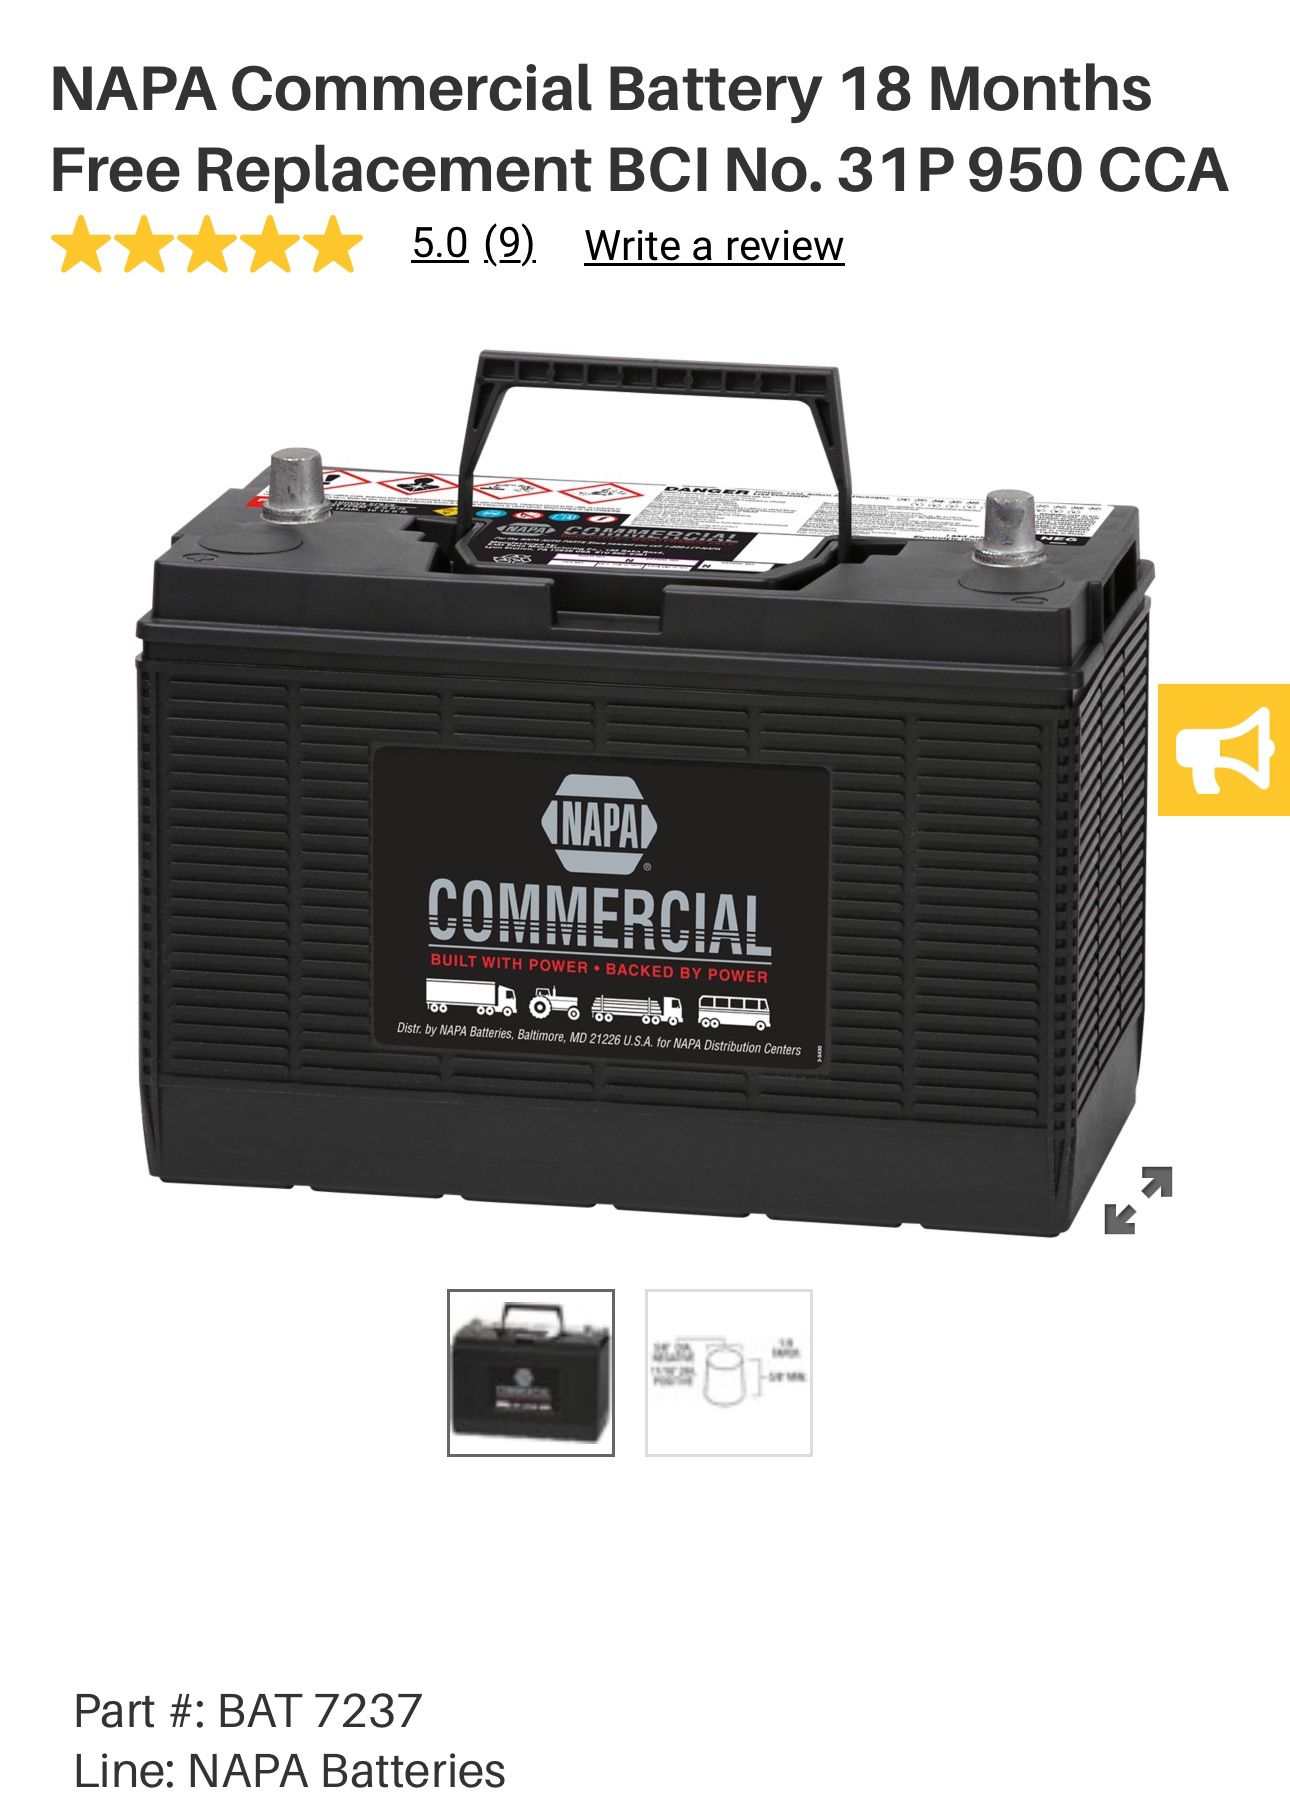 NAPA Commercial Battery BCI No. 31 950 CCA